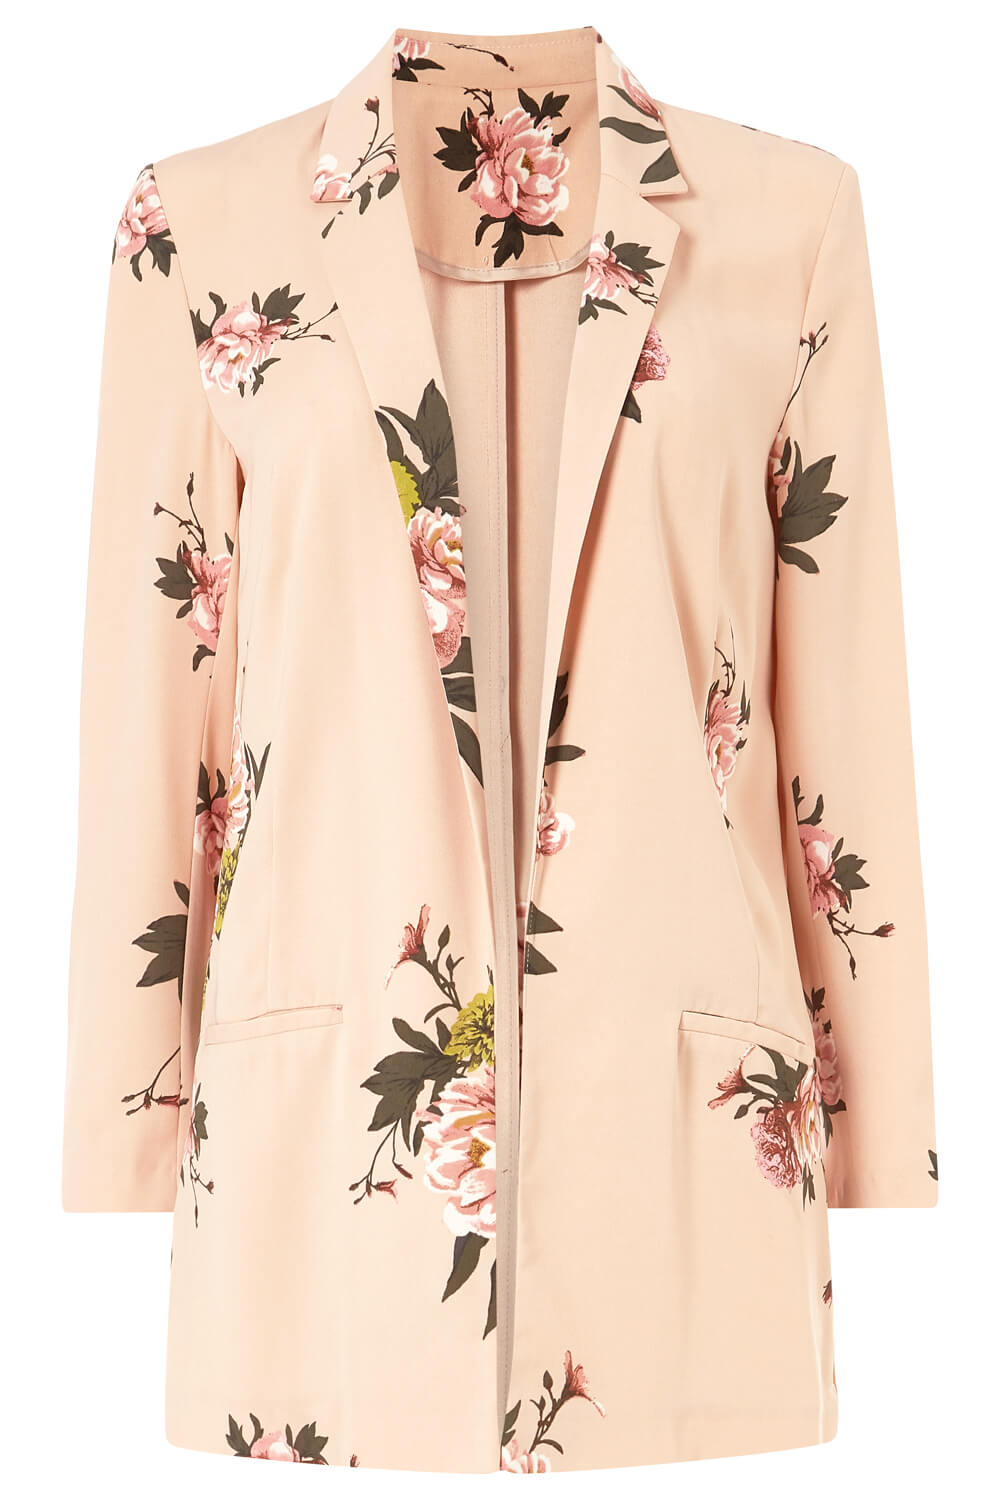 floral-printed-jacket-in-light-pink-roman-originals-uk